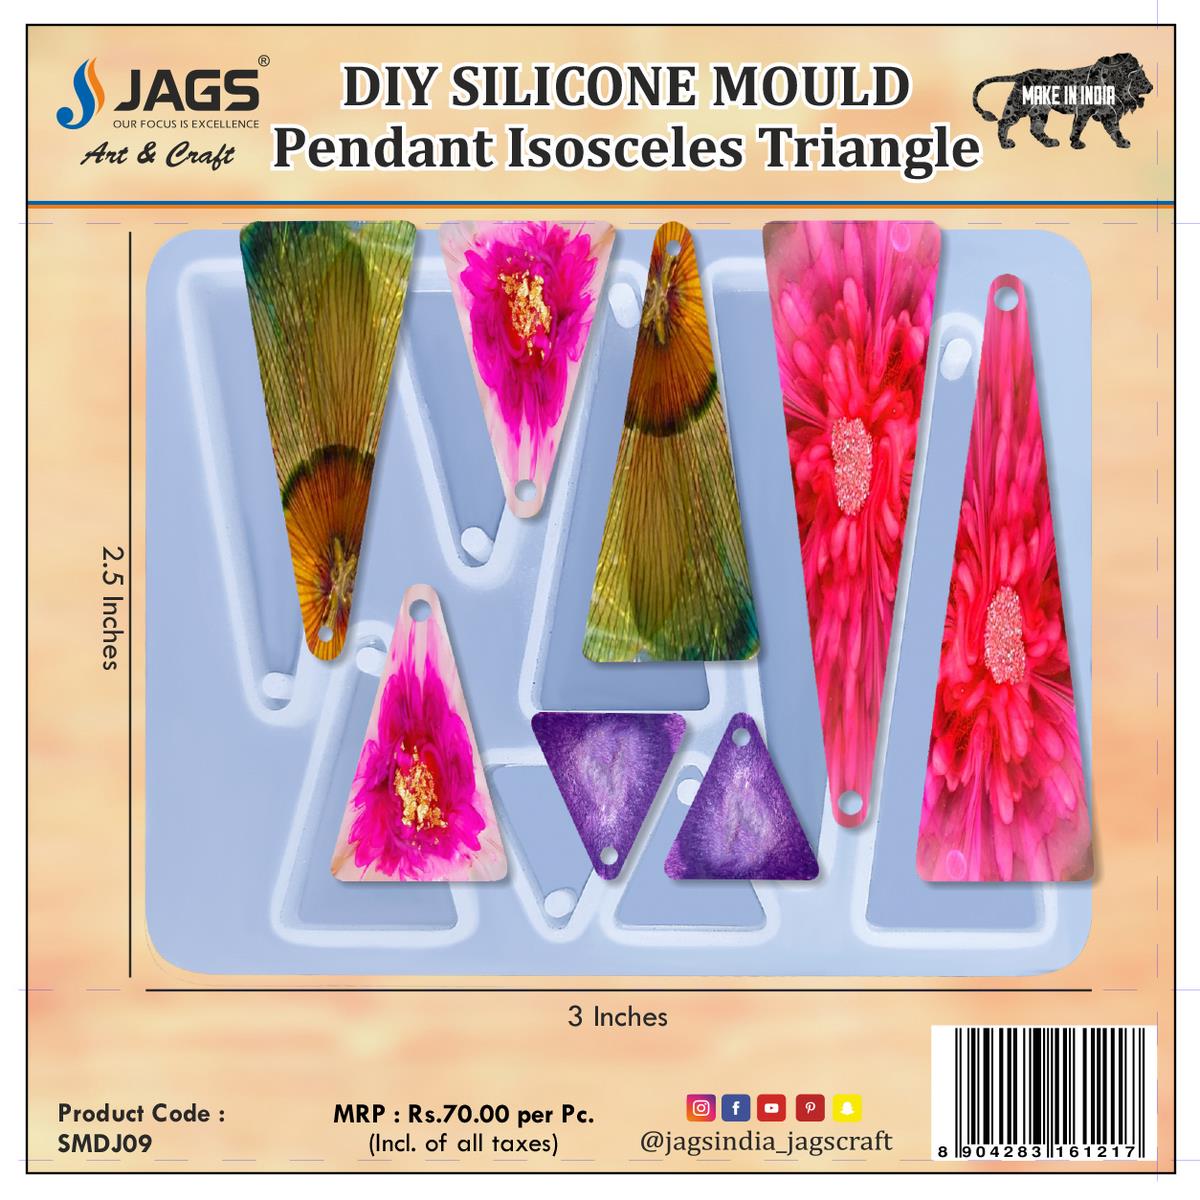 jags-mumbai Mould Silicone Mould Diy Jewelry Pendant Isosceles Triangle